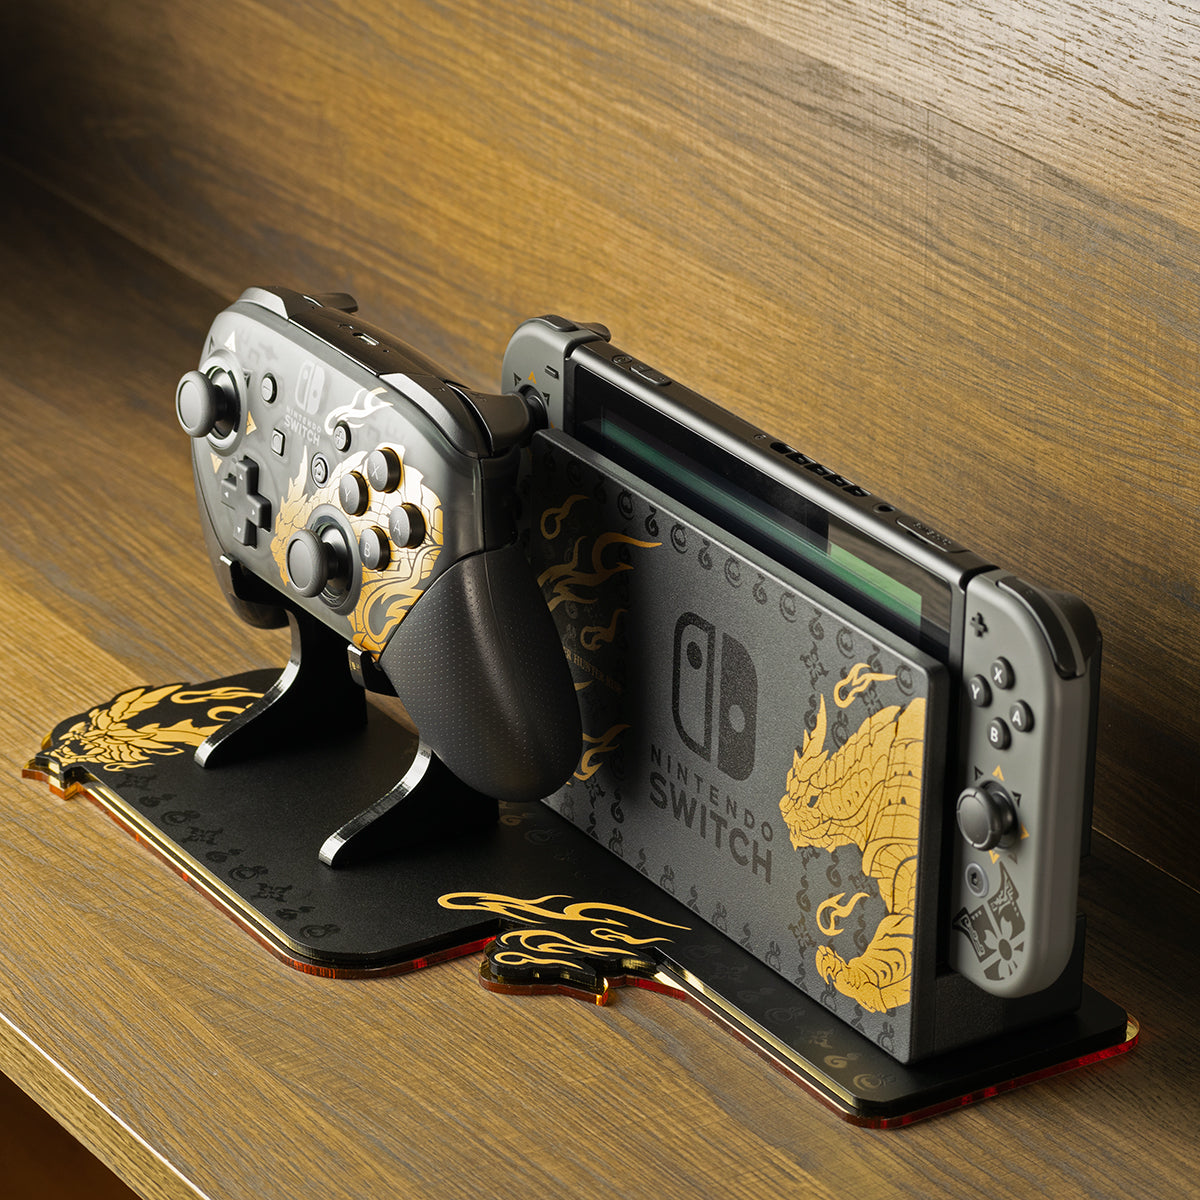 Monster Hunter Rise - Nintendo Switch, Nintendo Switch